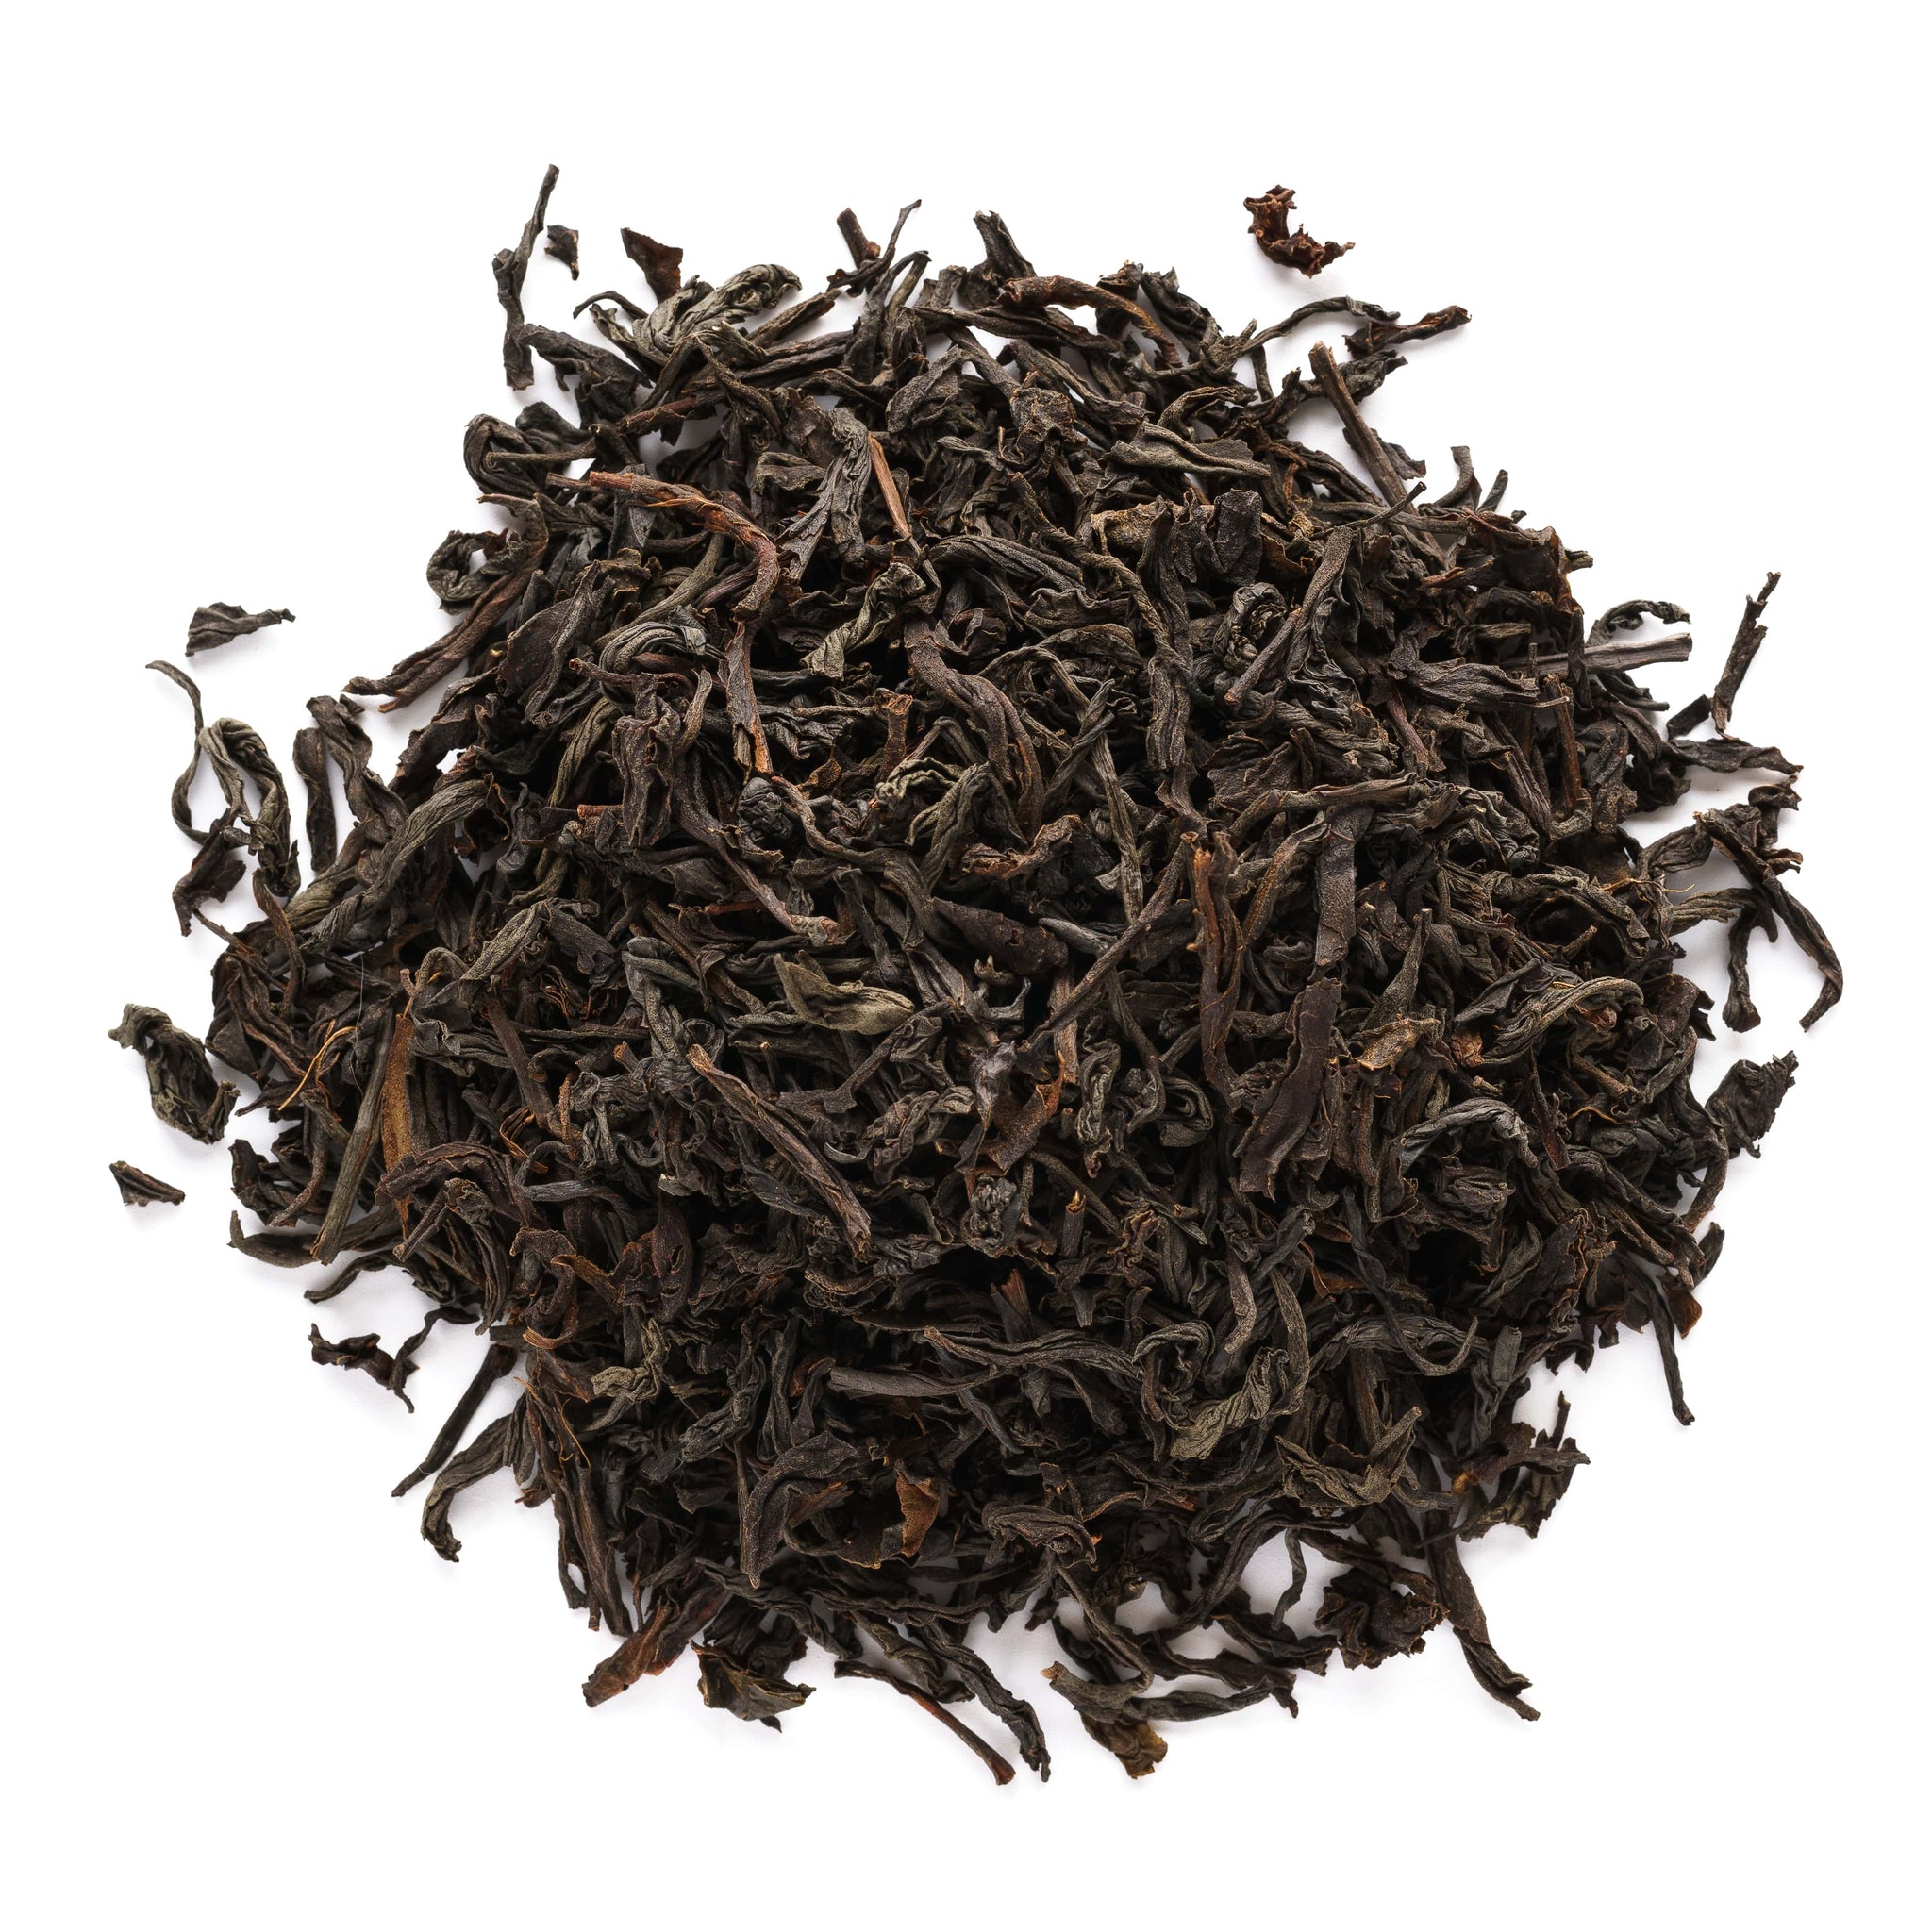 A guide to Black Tea Dragonfly Tea